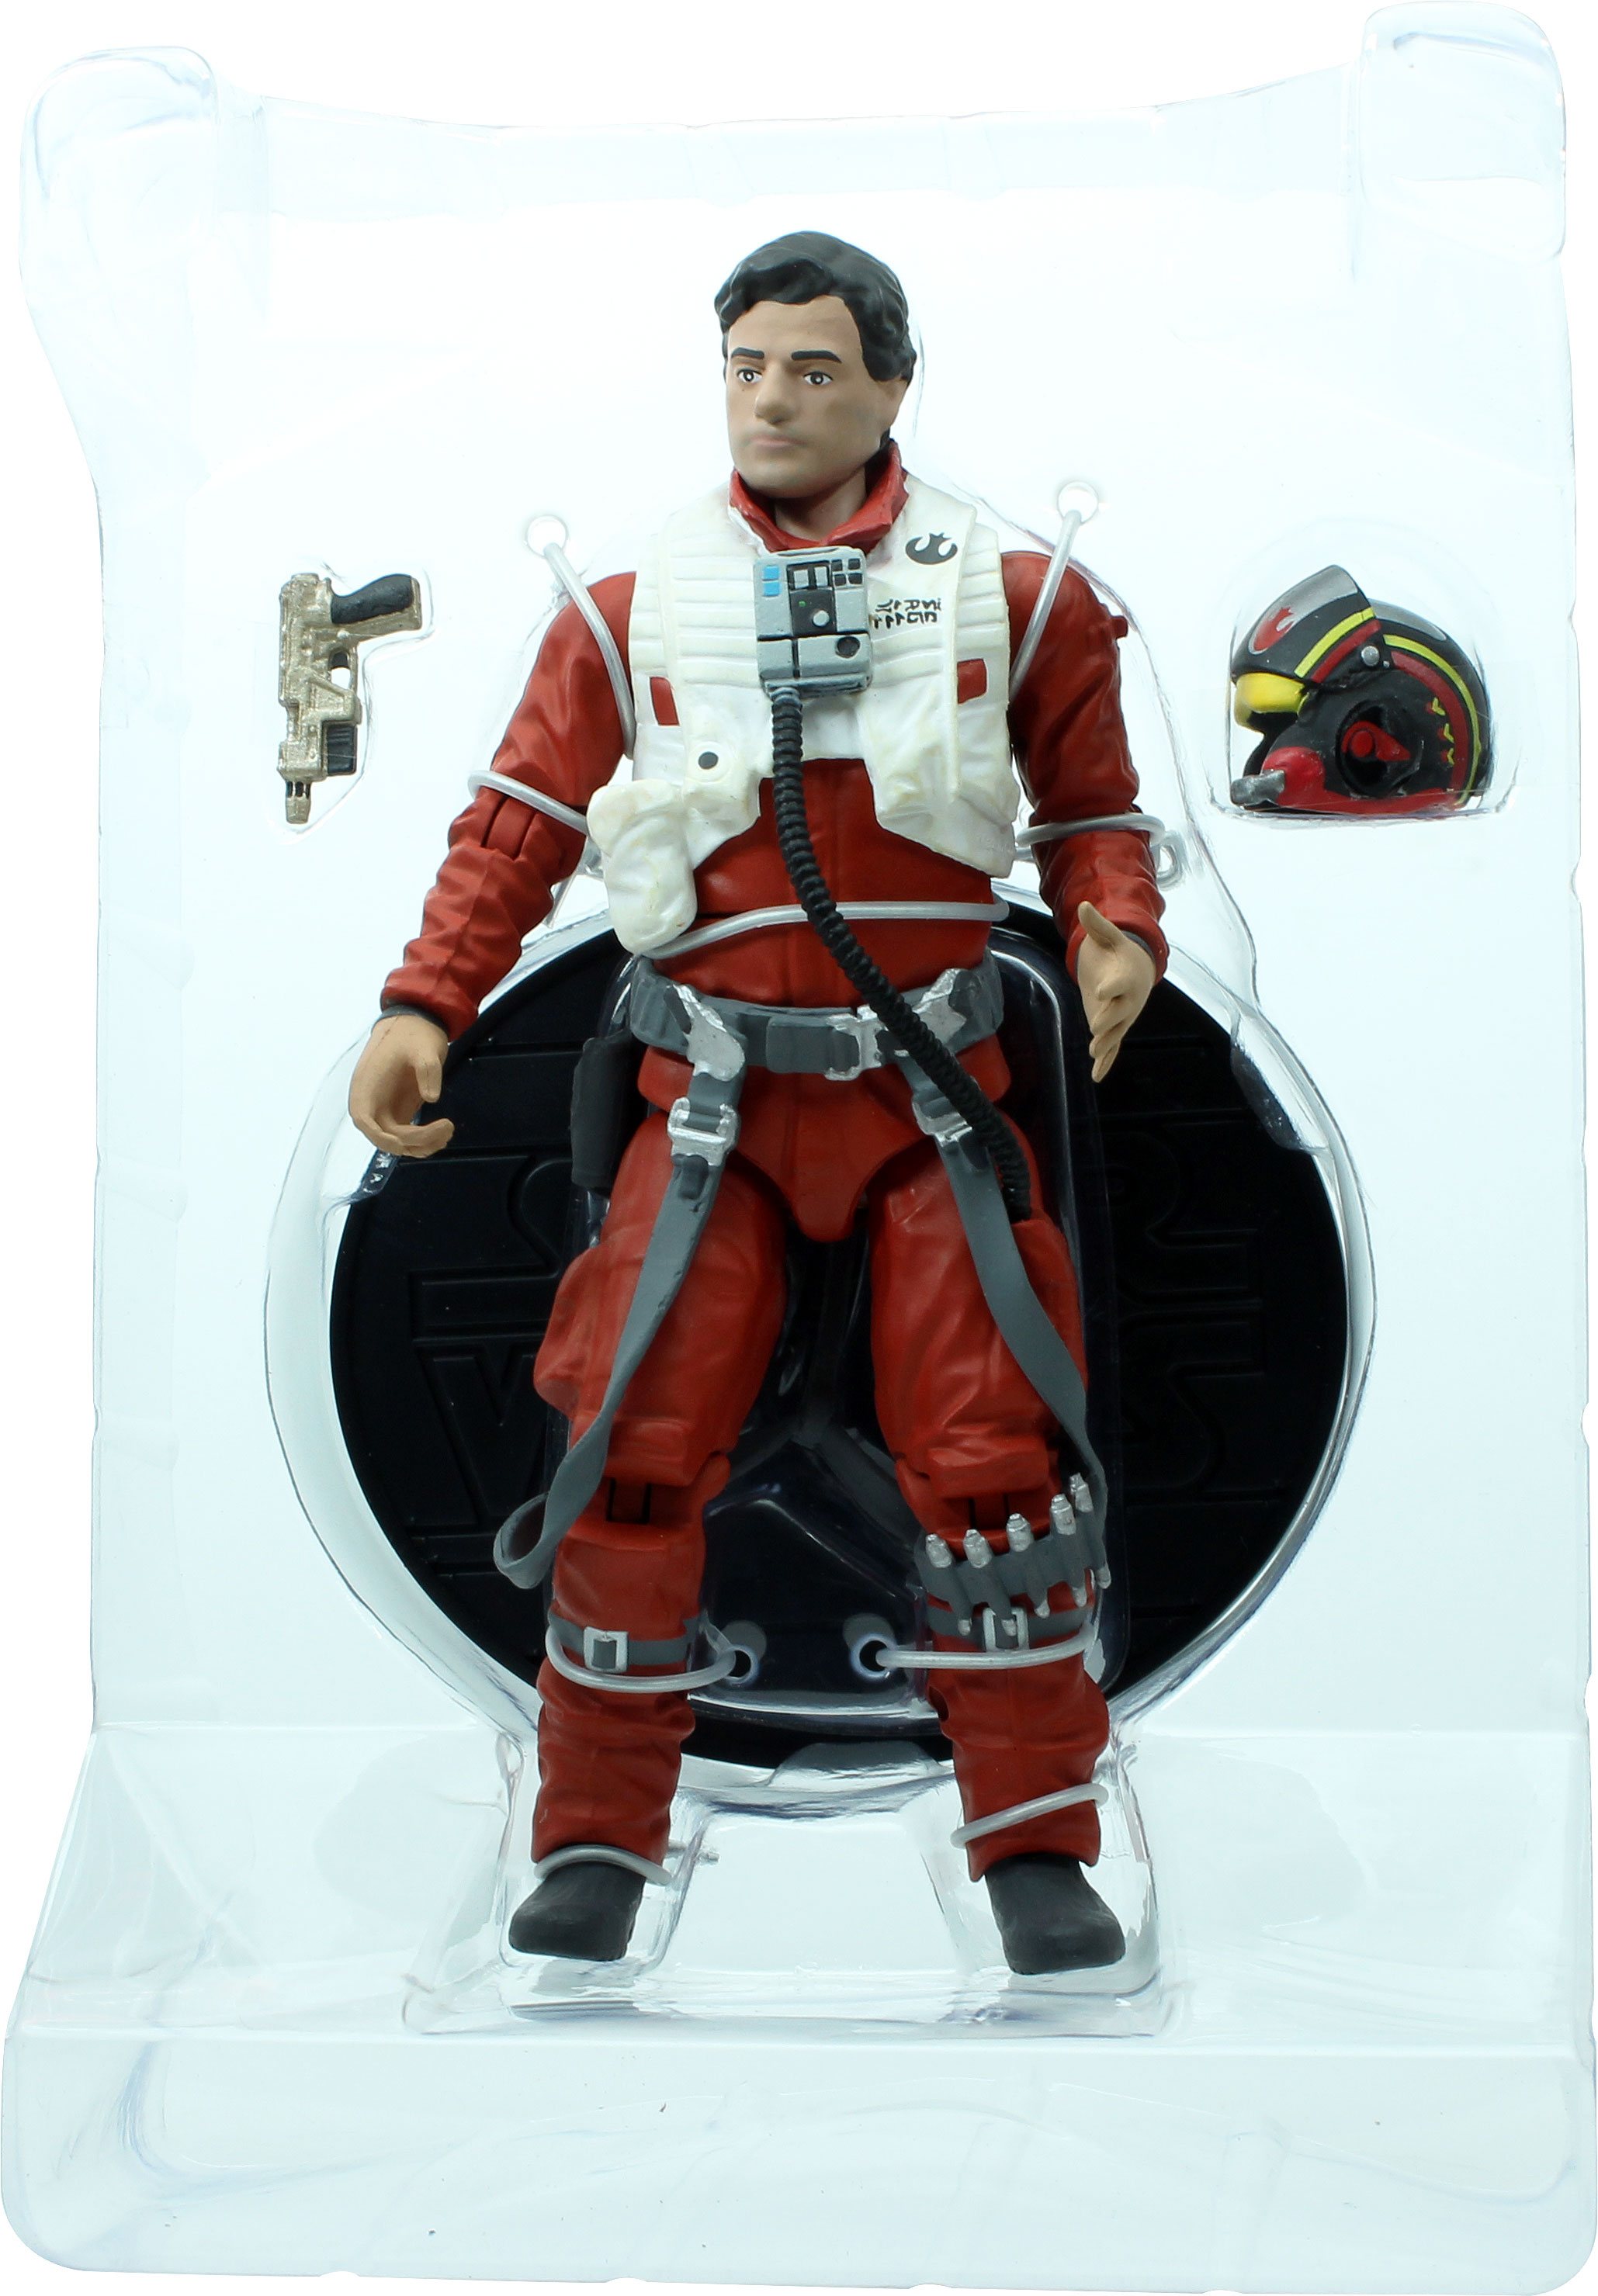 Poe Dameron X-Wing Pilot